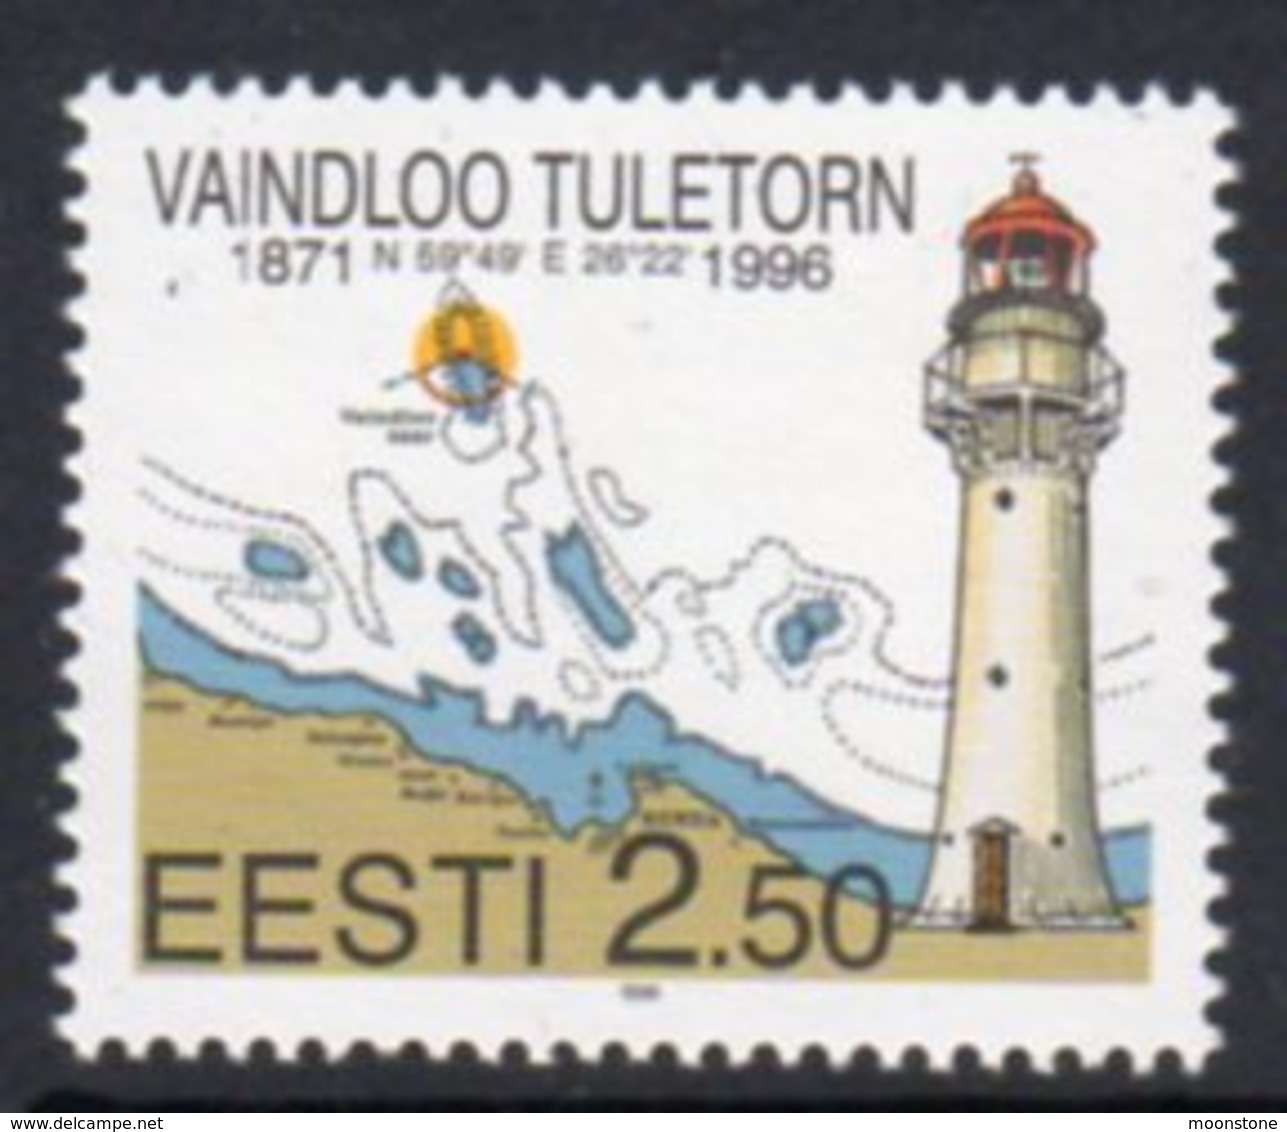 Estonia 1996 Vaindloo Lighthouse, MNH, Ref. 21 - Lighthouses